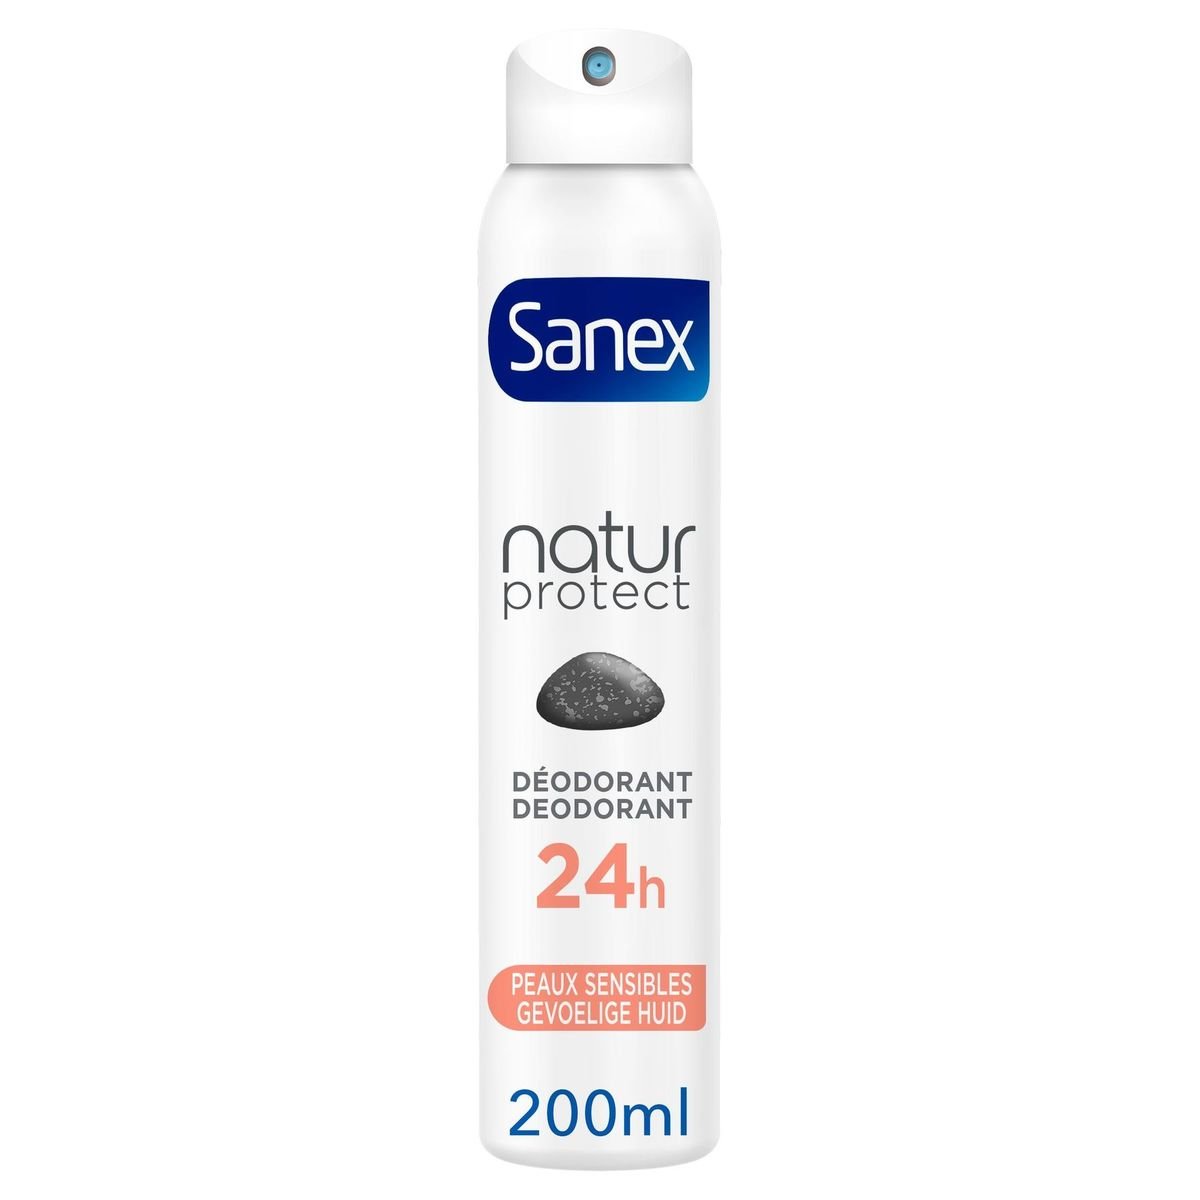 Sanex Natur Protect Aluinsteen Gevoelige Huid Deodorant Spray 200 ml